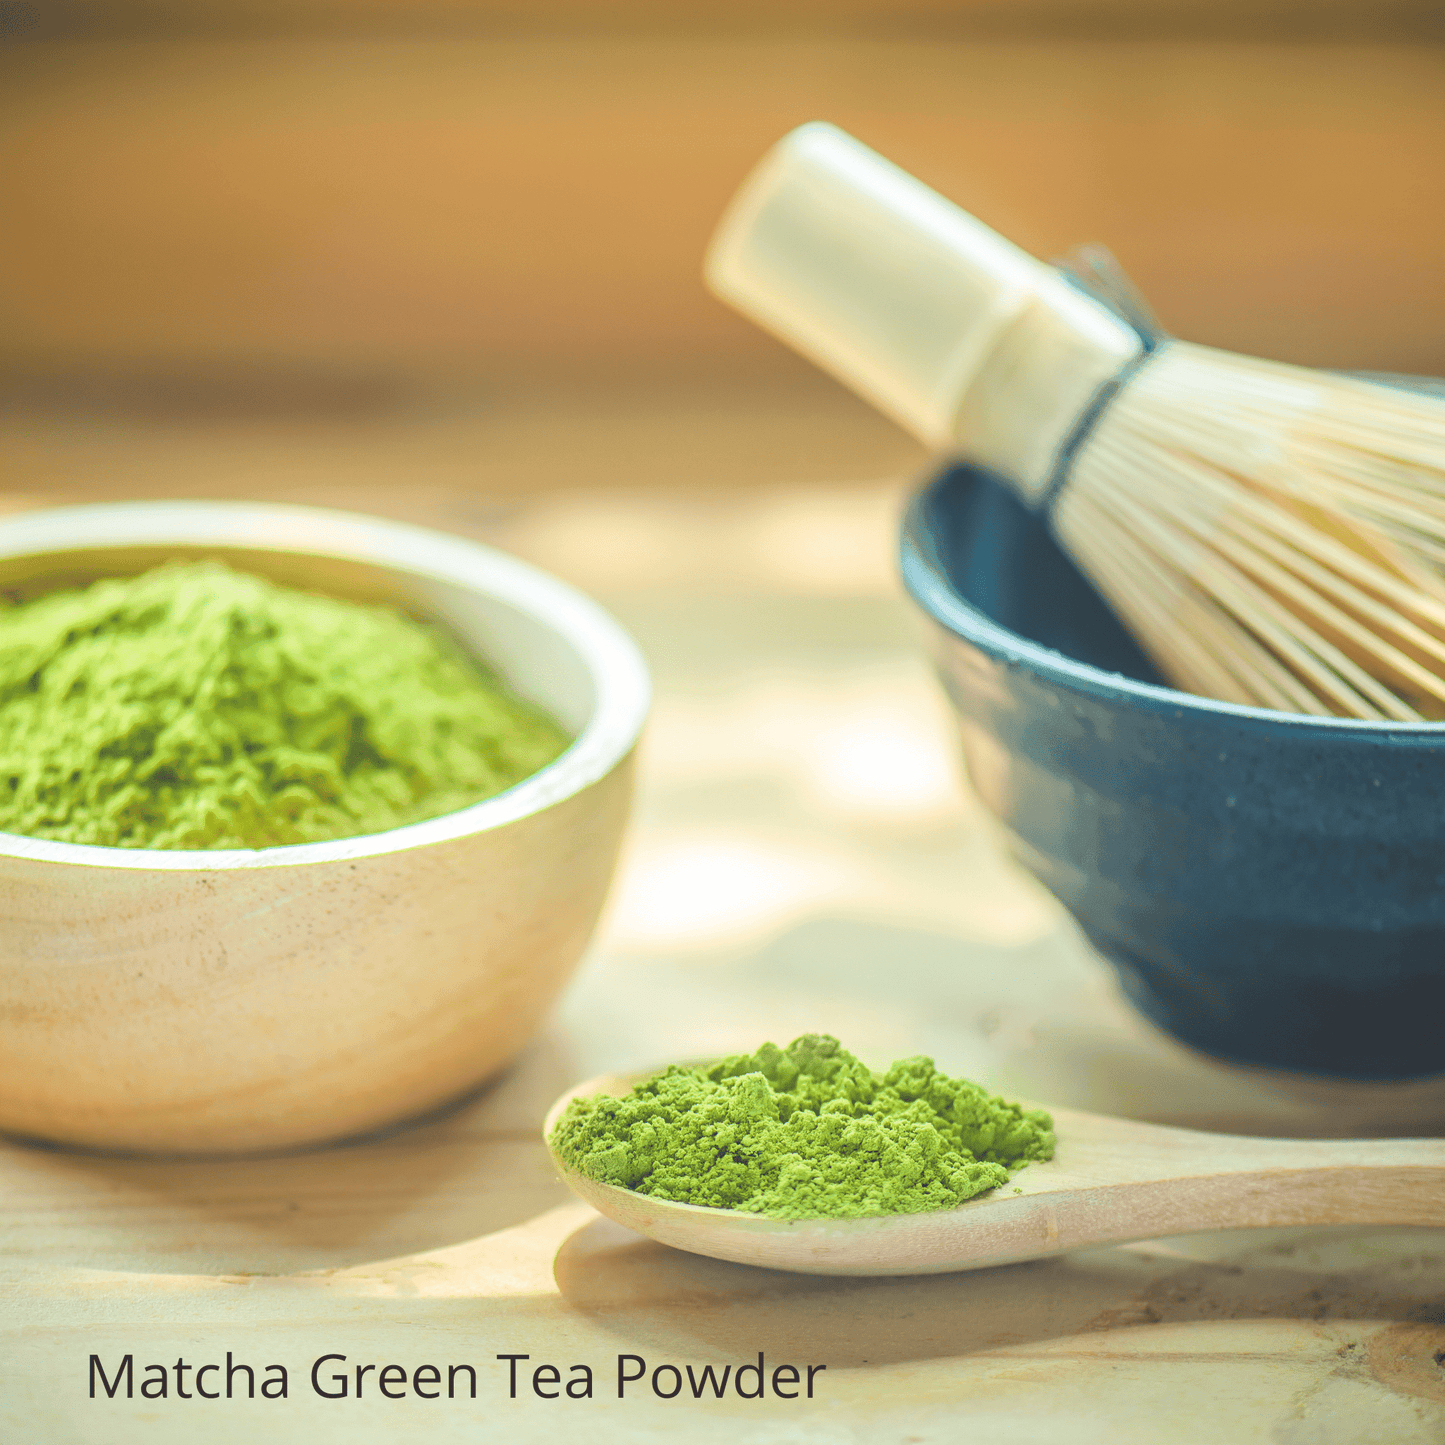 Be Green Bath and Body Dry Shampoo contains matcha green tea